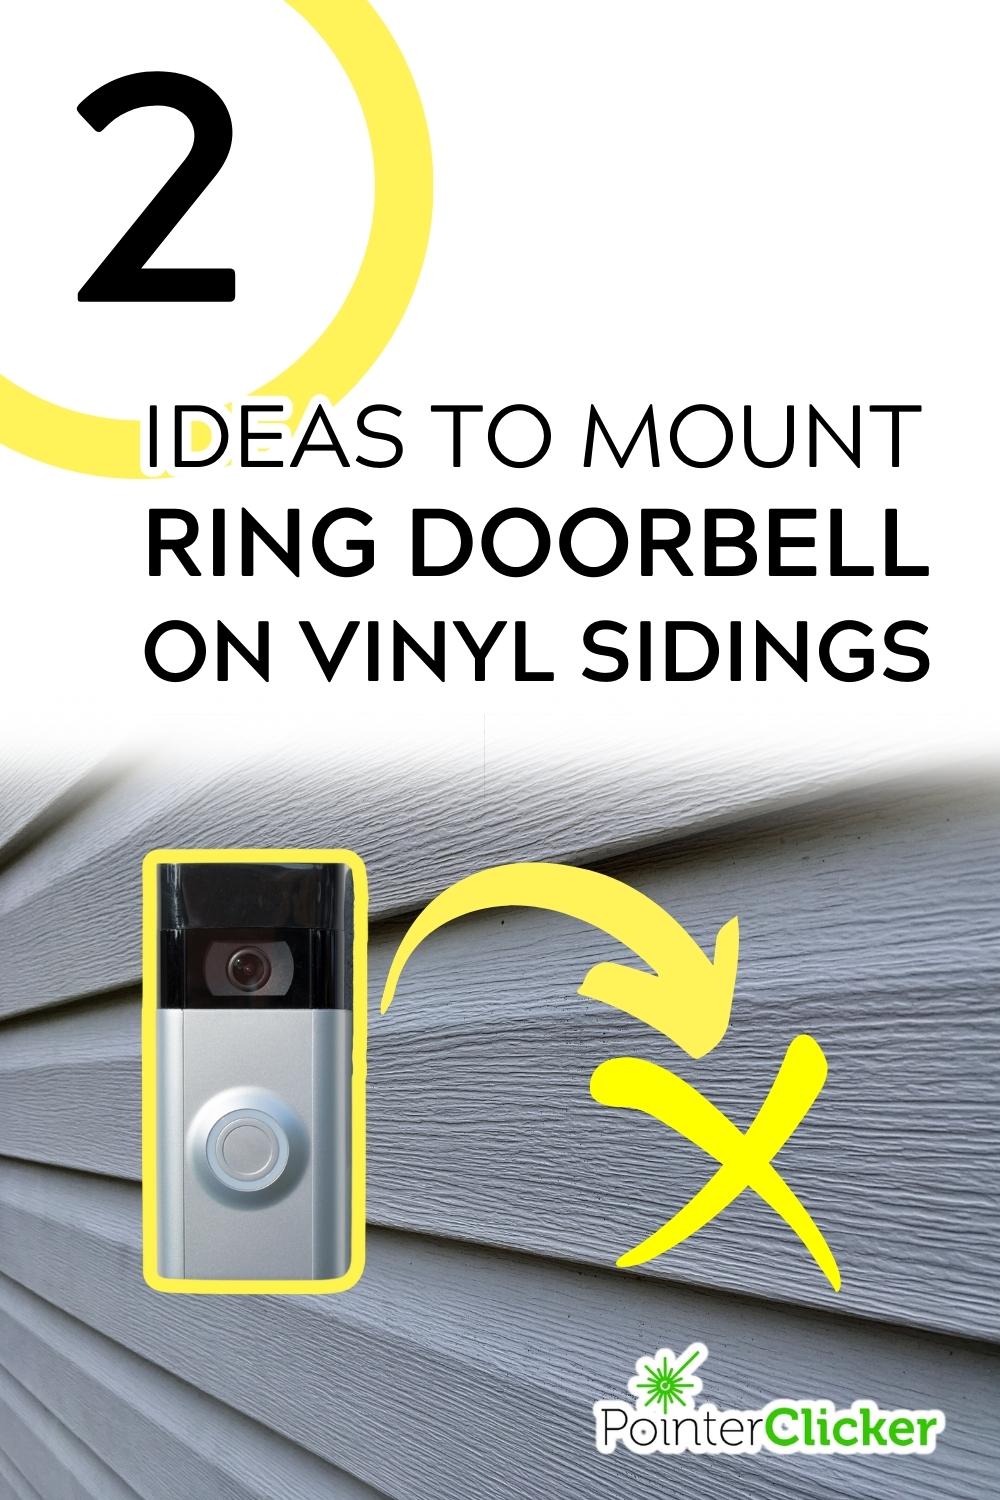 2 ideas to mount ring doorbell on vinyl sidings